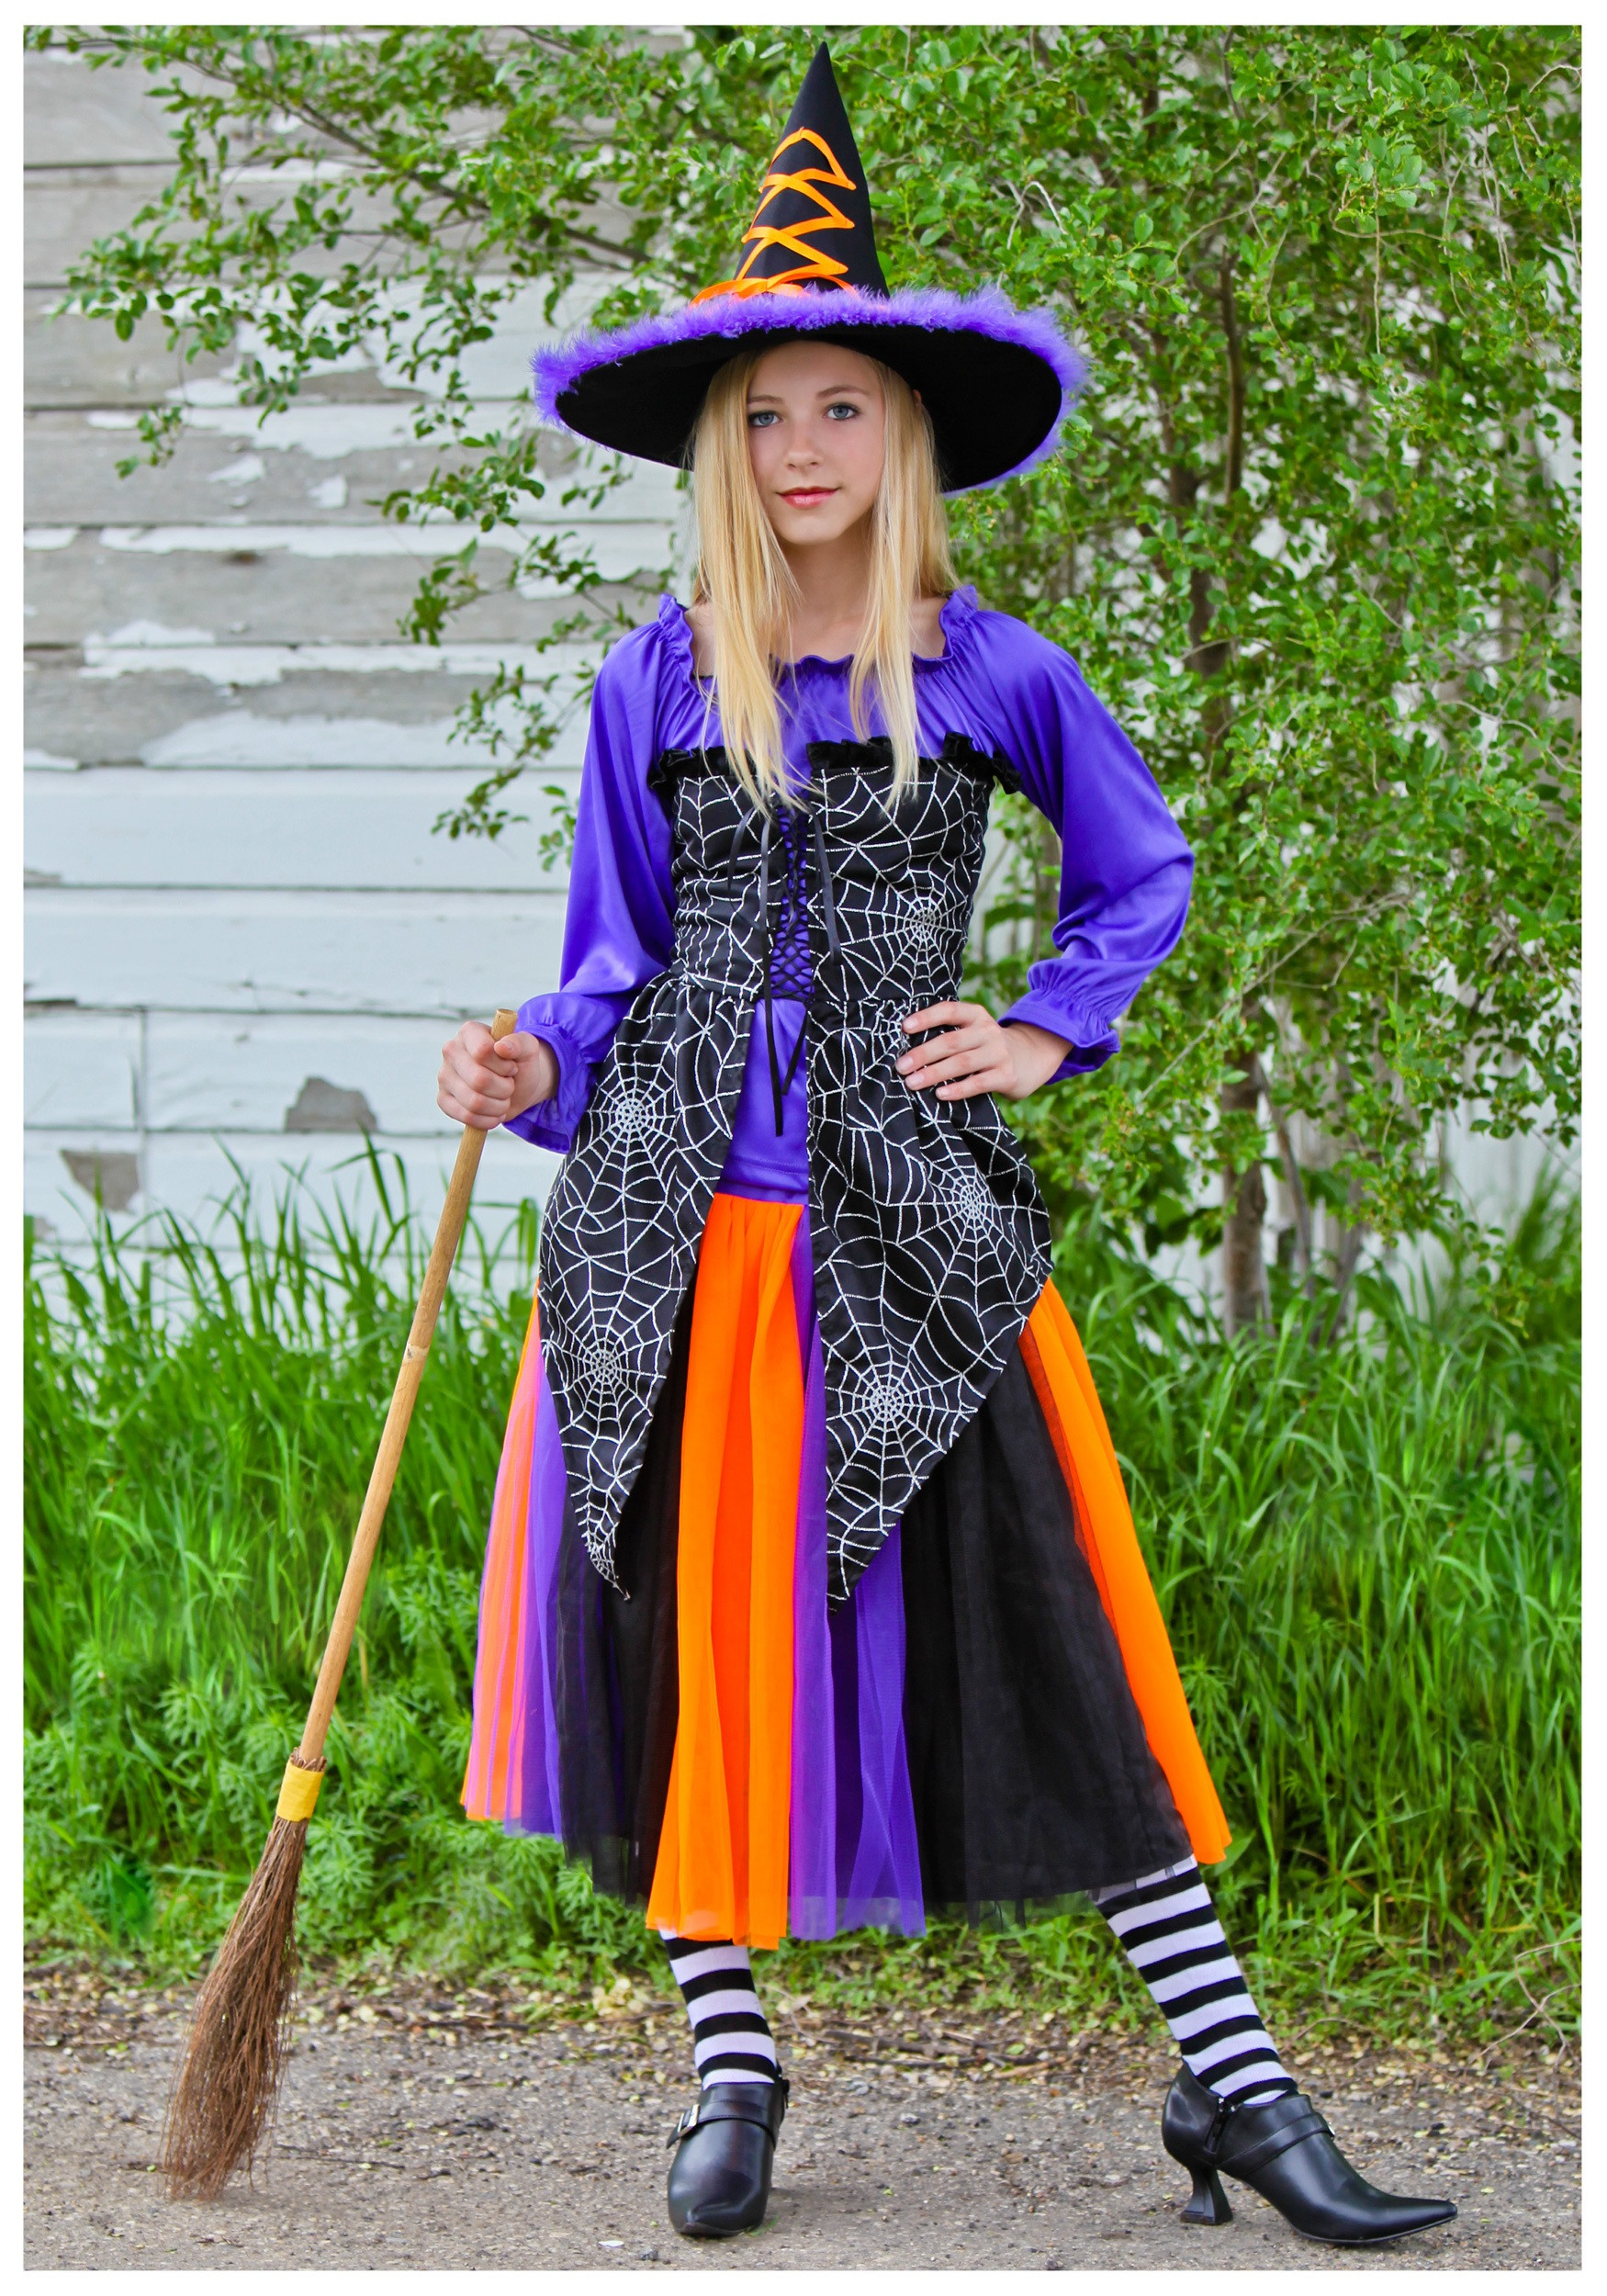 DIY Halloween Costumes With Tutus
 Witch Tutu Costume